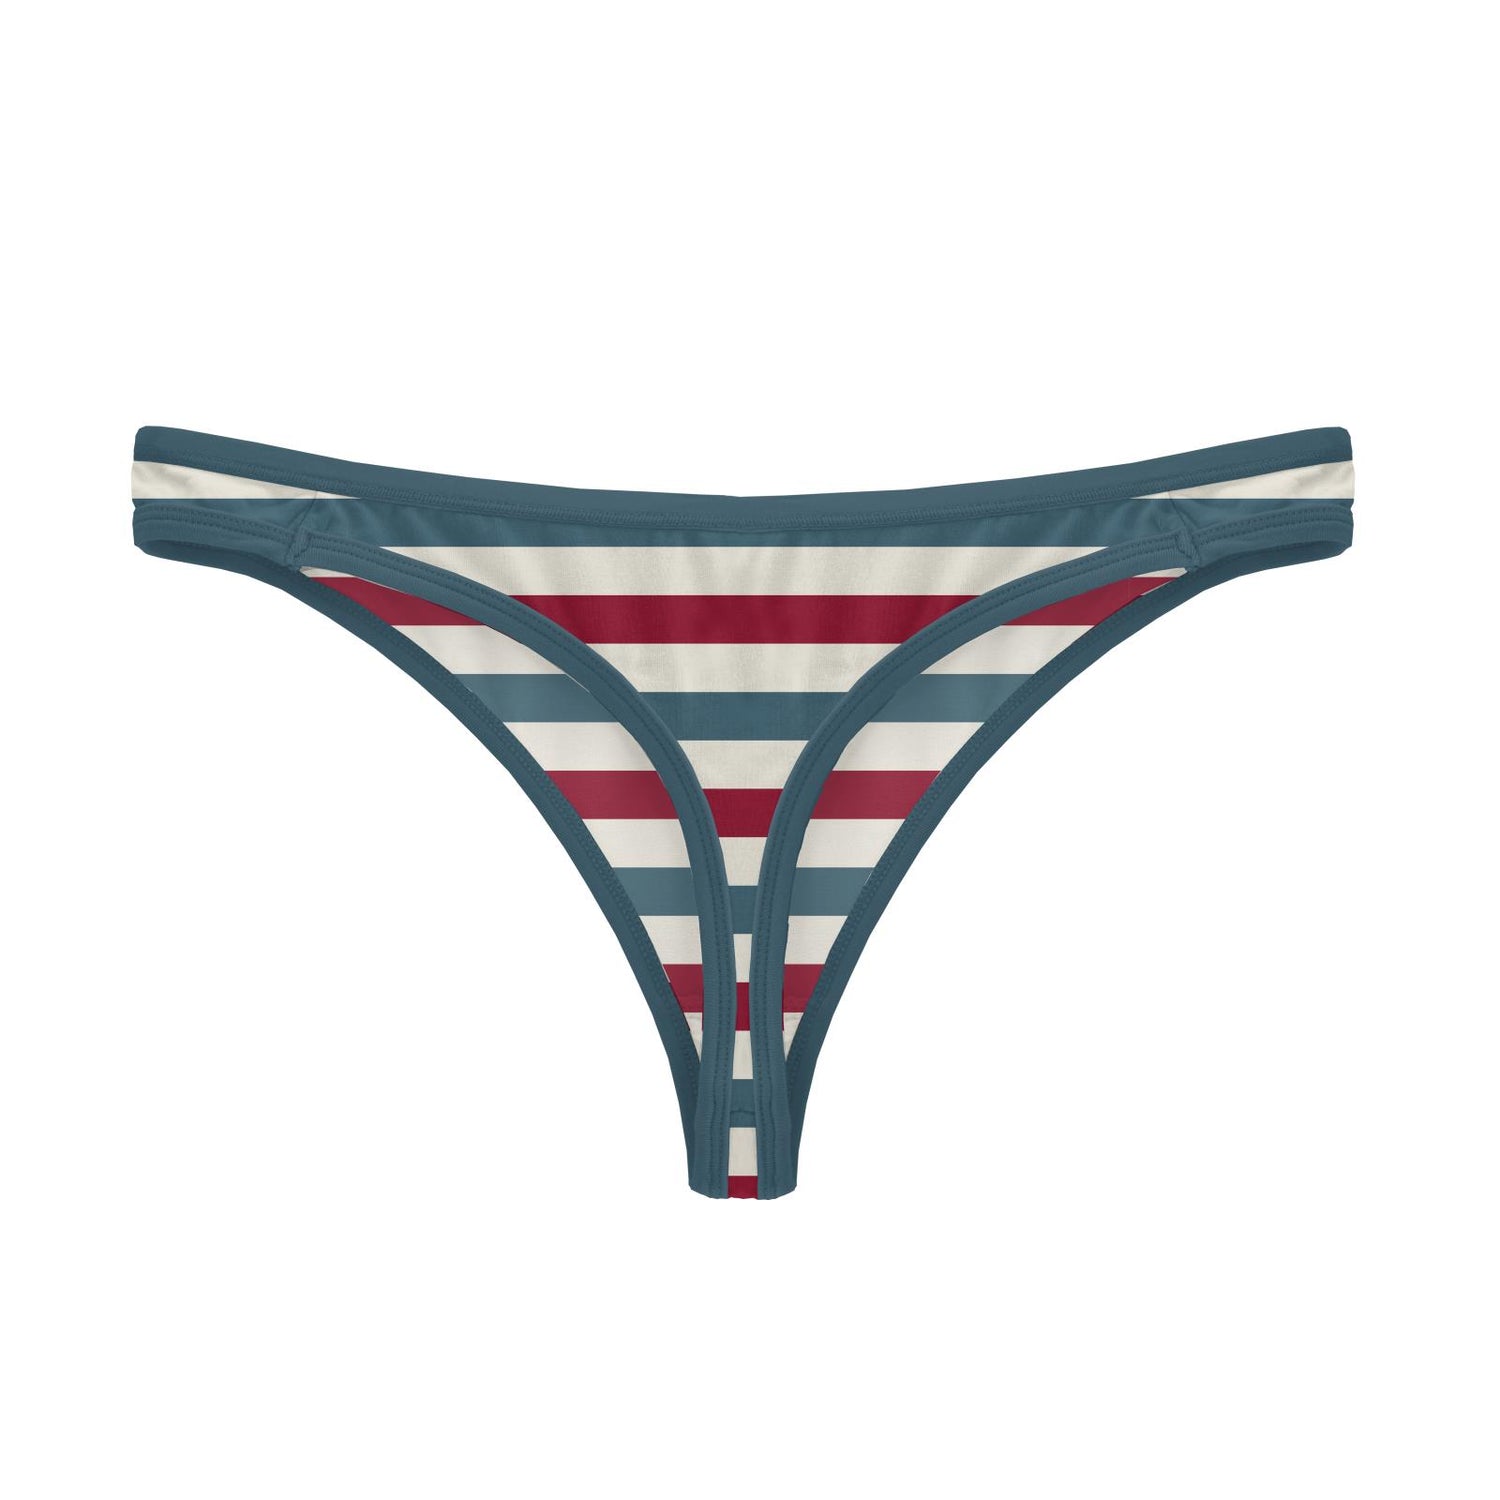 Women's Print Classic Thong Underwear in USA Stripe